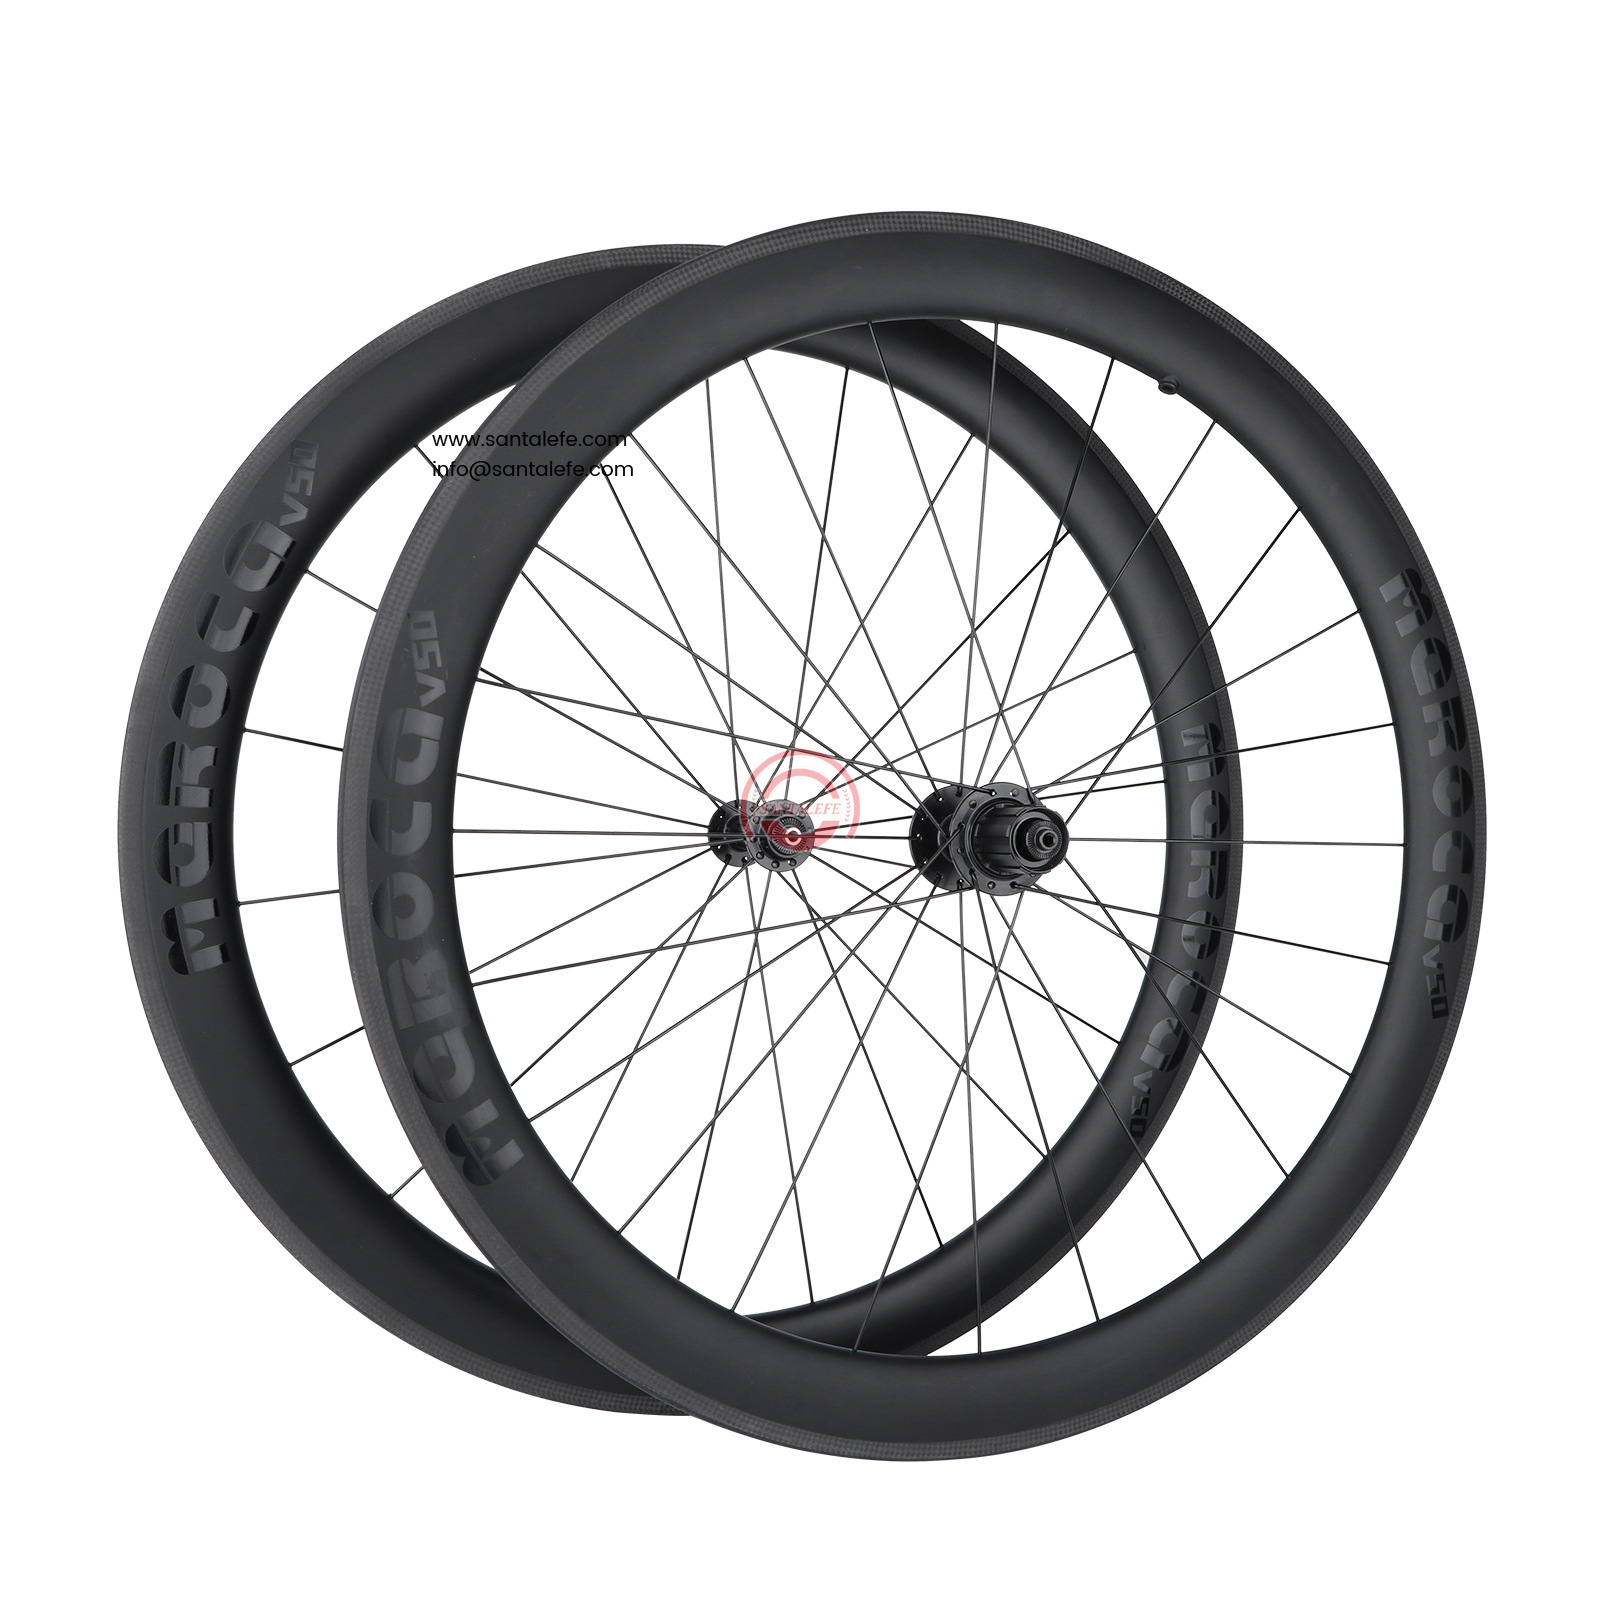 MEROCA carbon fiber bicycle wheelset